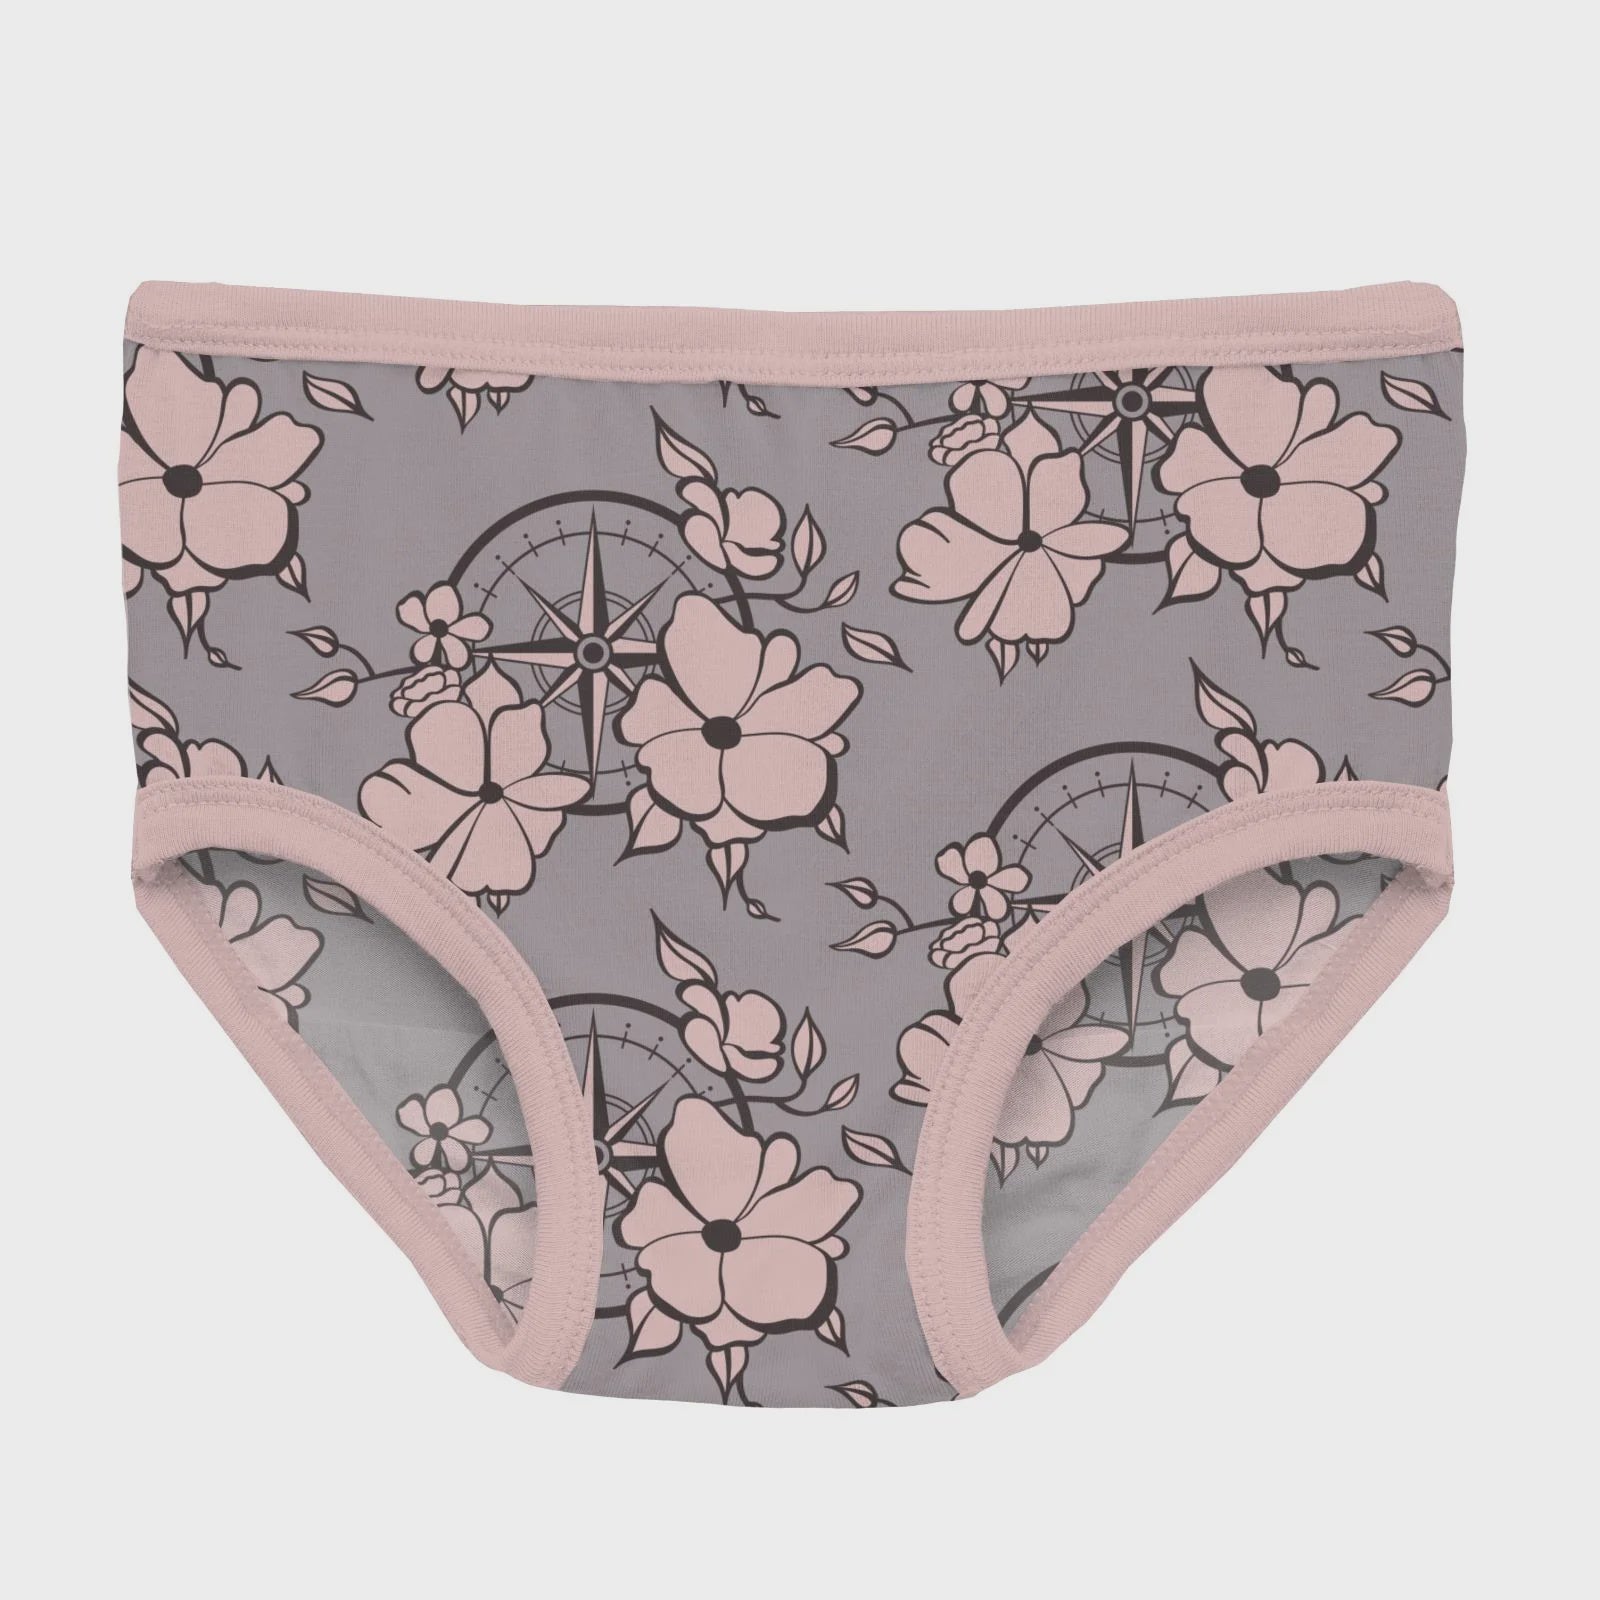 Kickee Feather Nautical Floral Underwear